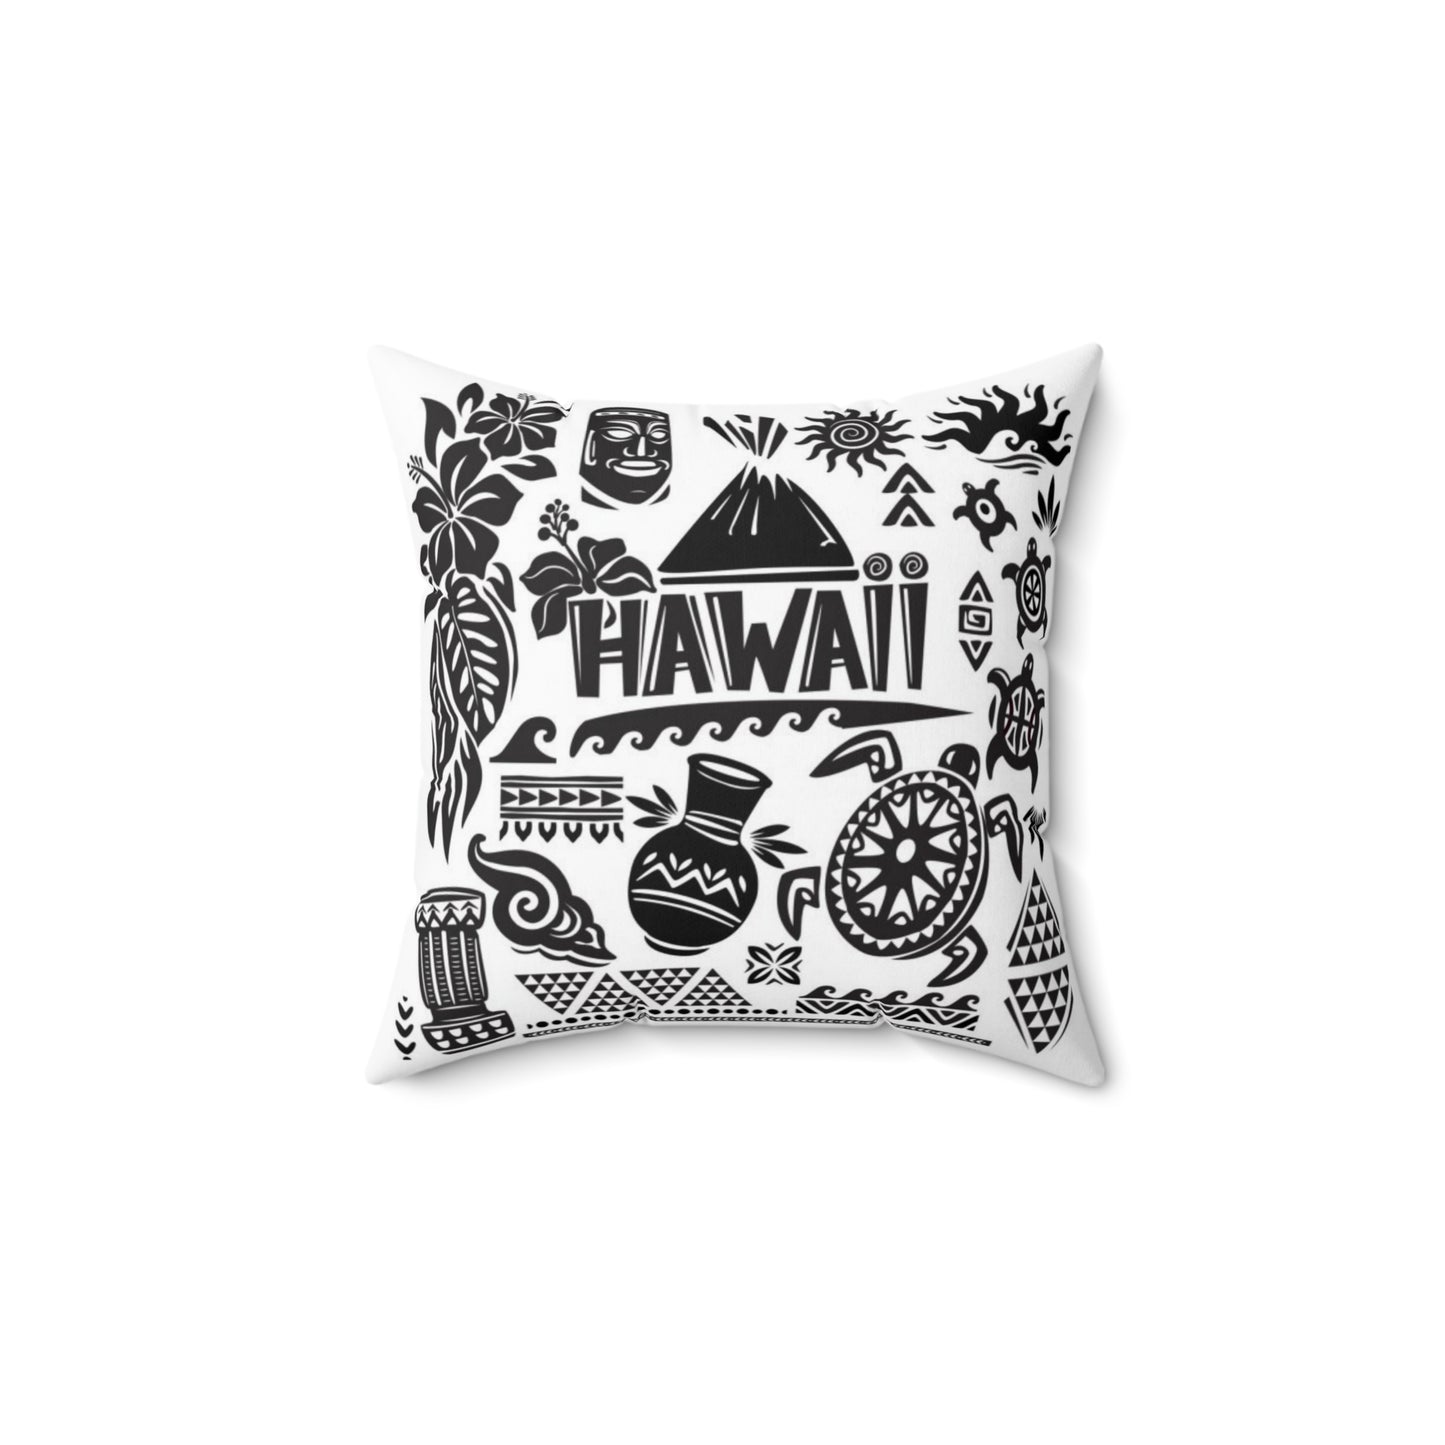 Hawaii Fun Pillow - Faux Suede Square Pillow